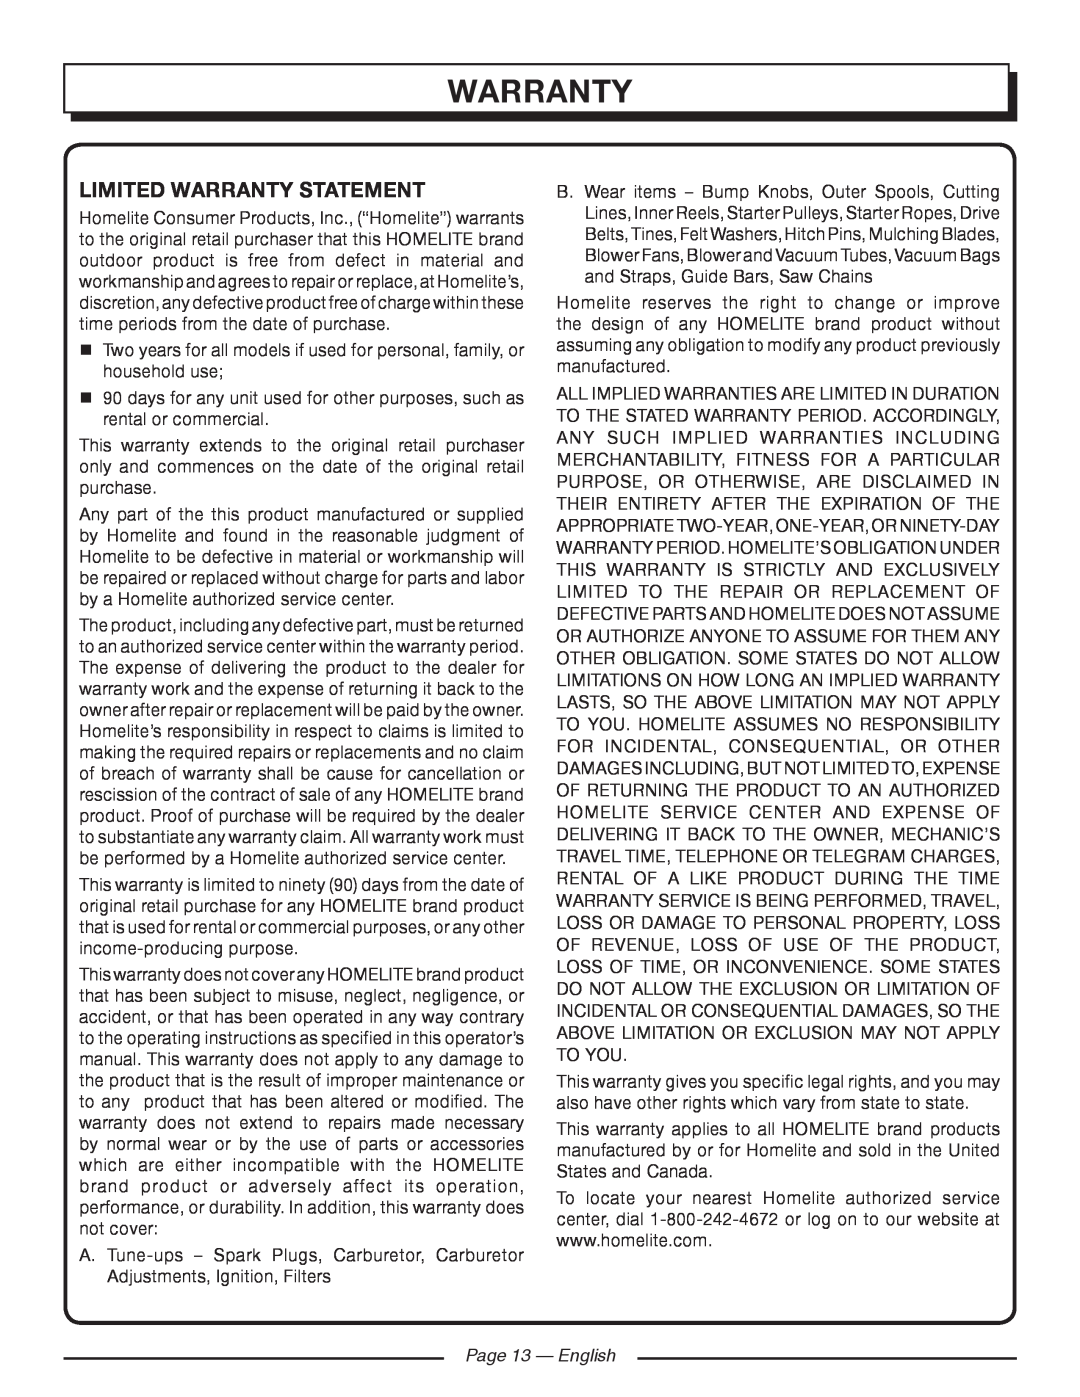 Homelite UT41120 manuel dutilisation Limited Warranty Statement, Page 13 - English 